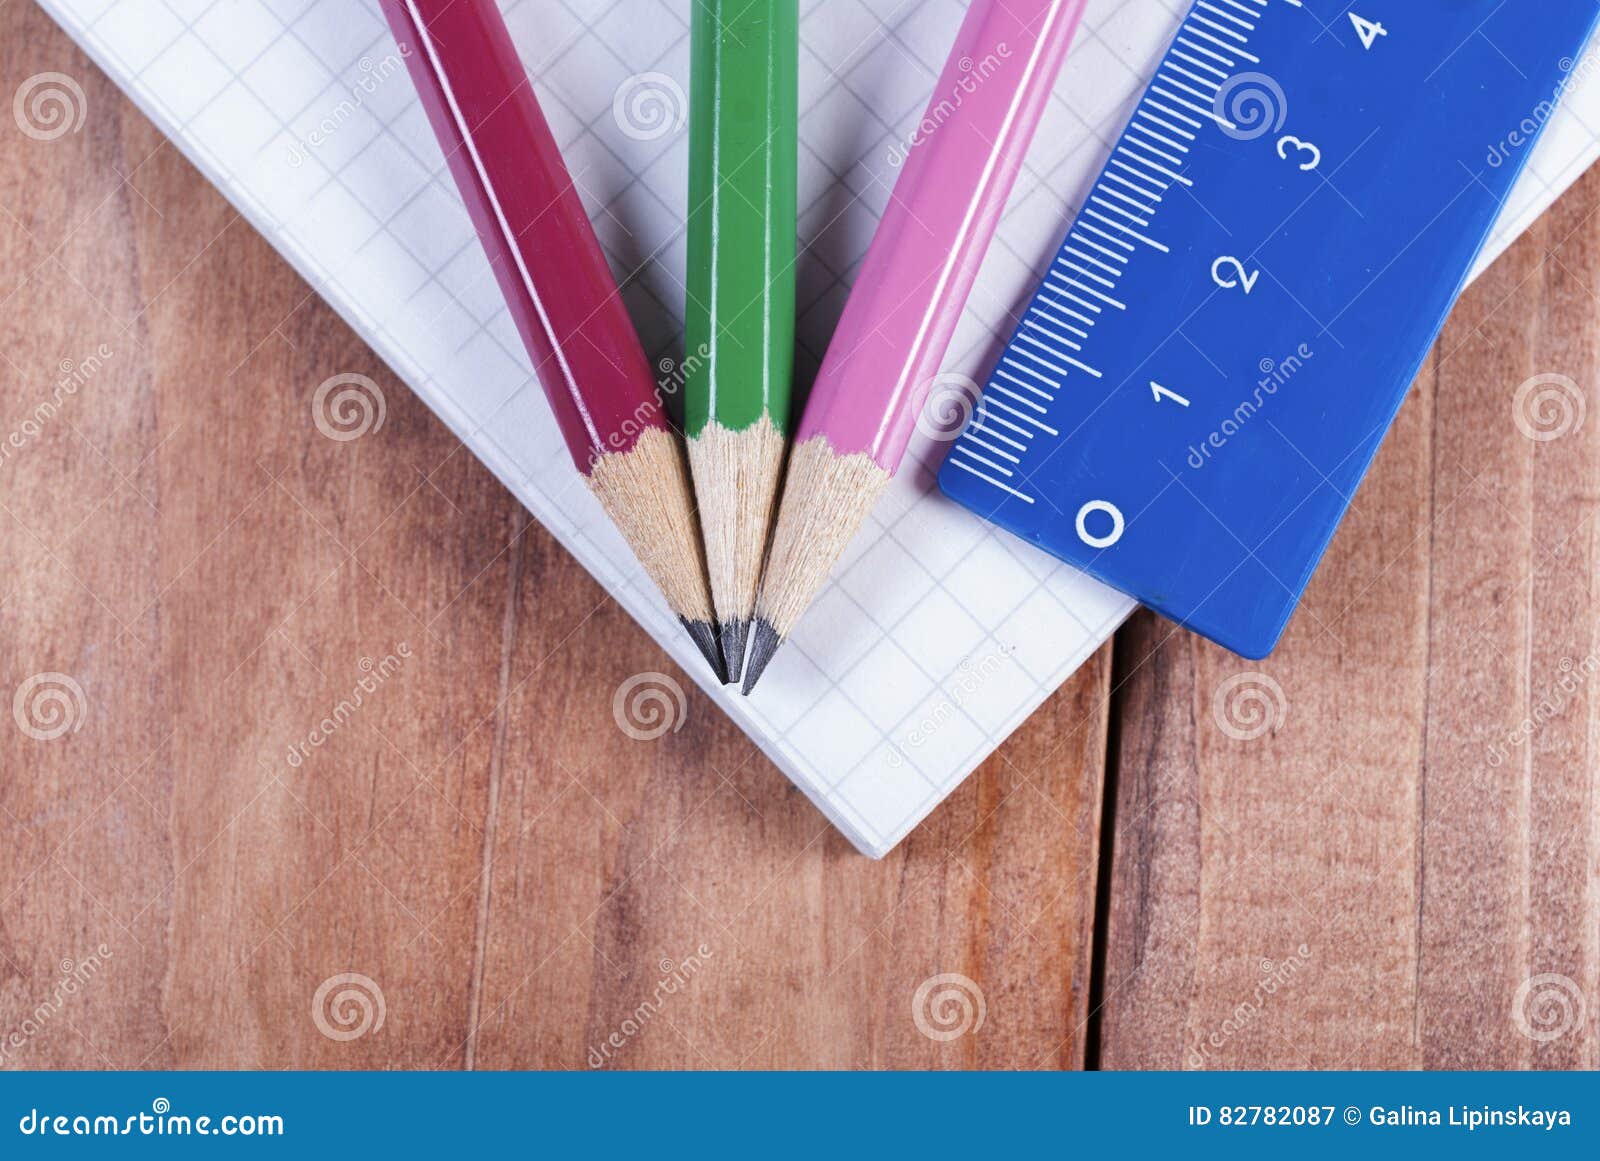 На столе лежит линейка карандаш. Карандаши линейки тетради на столе. Линейка и карандаш на столе. Блокнот и карандаш. Ручки и карандаши лежат на столе.